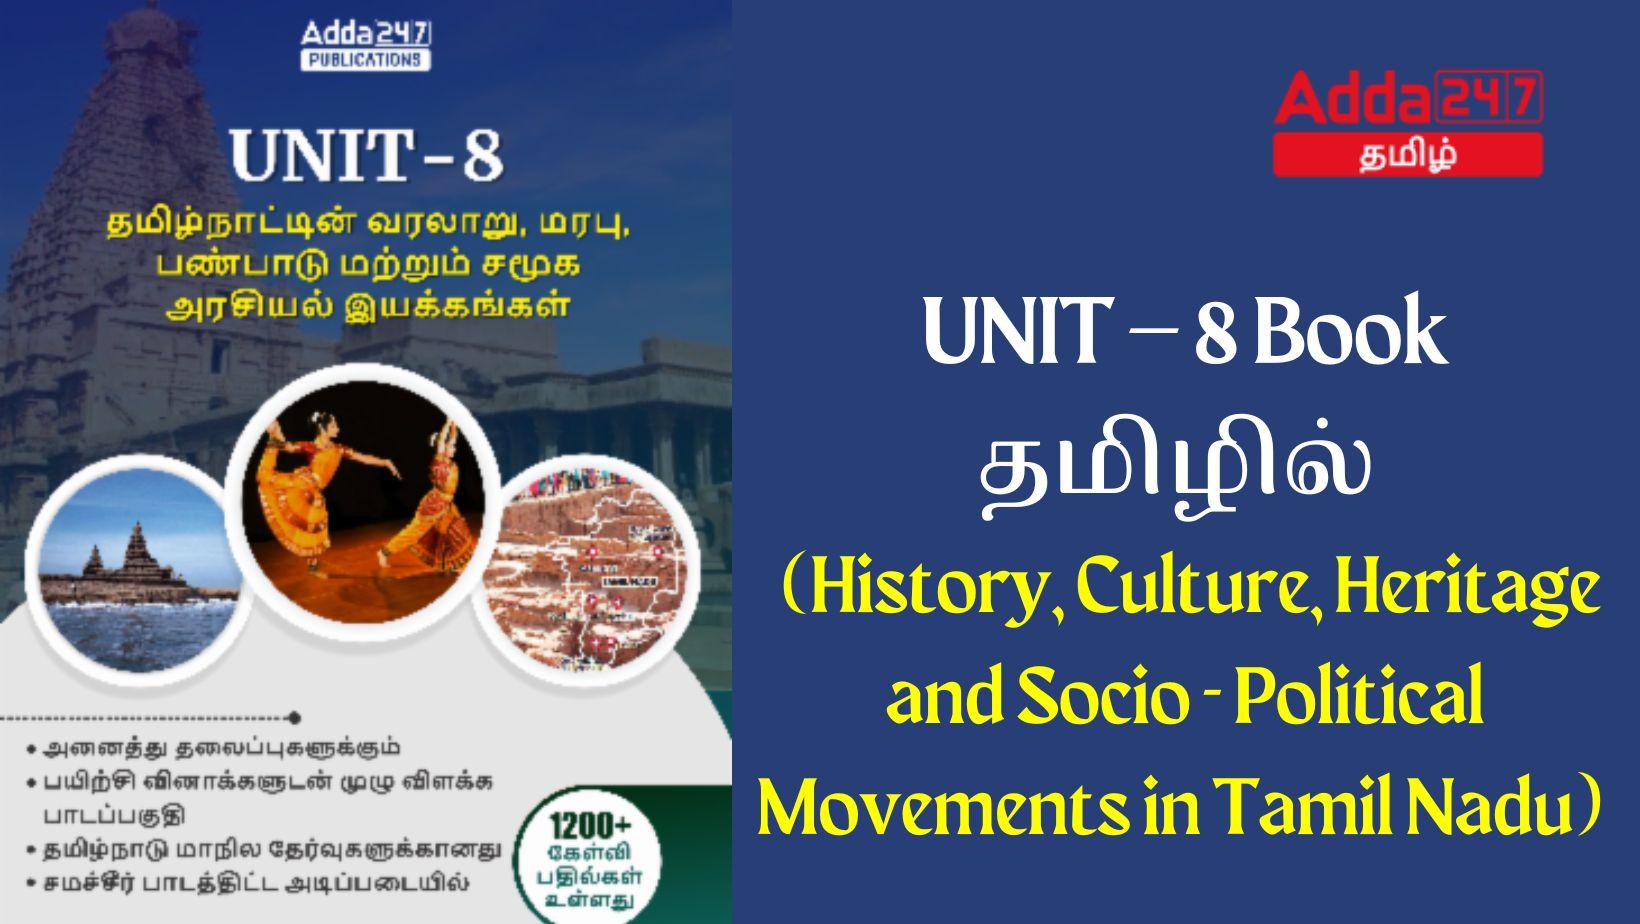 UNIT – 8 Book in Tamil